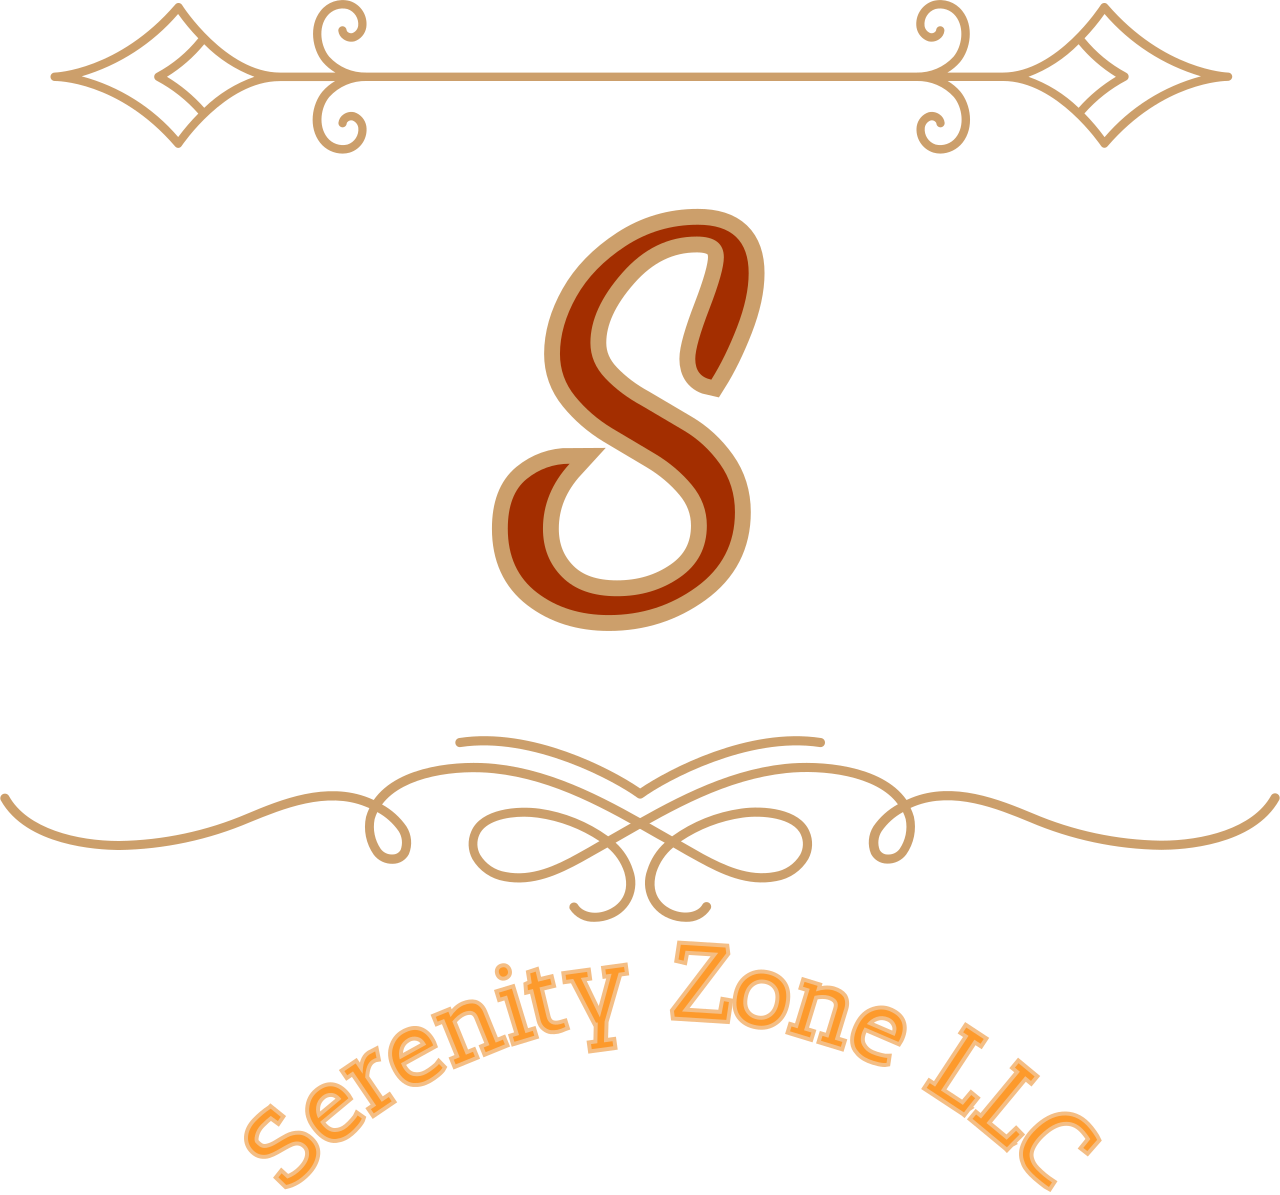 Serenity Zone LLC's web page